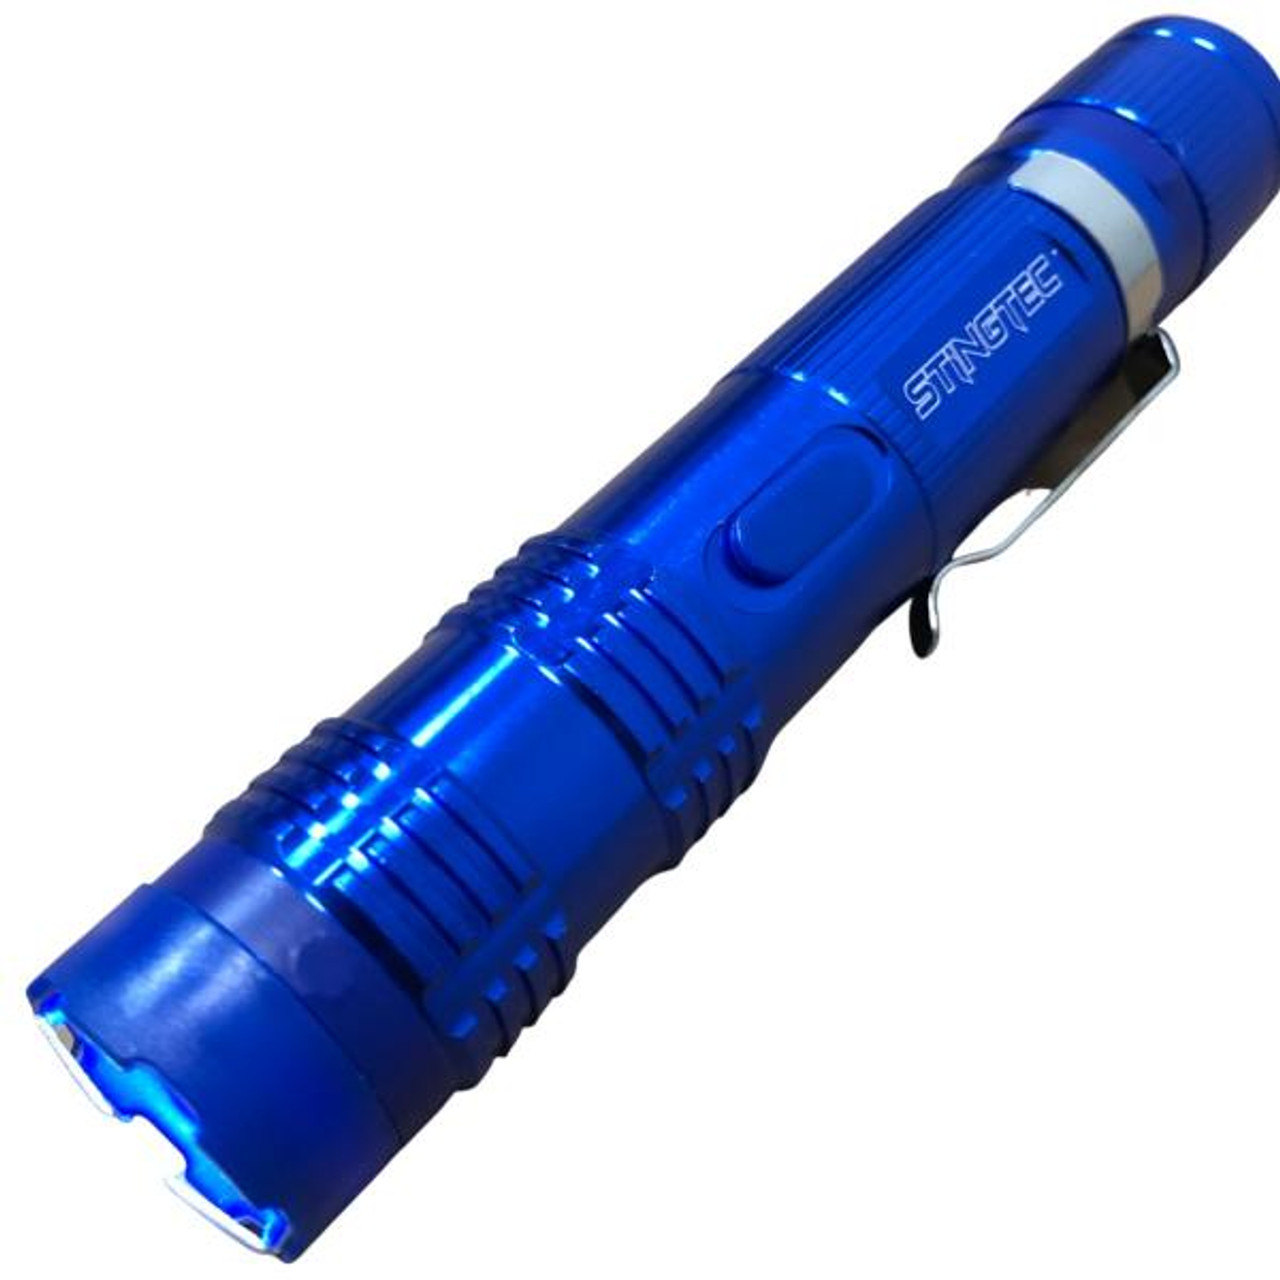 Tactical METAL Stun Gun Maximum Power Rechargeable With Bright LED Flashlight 